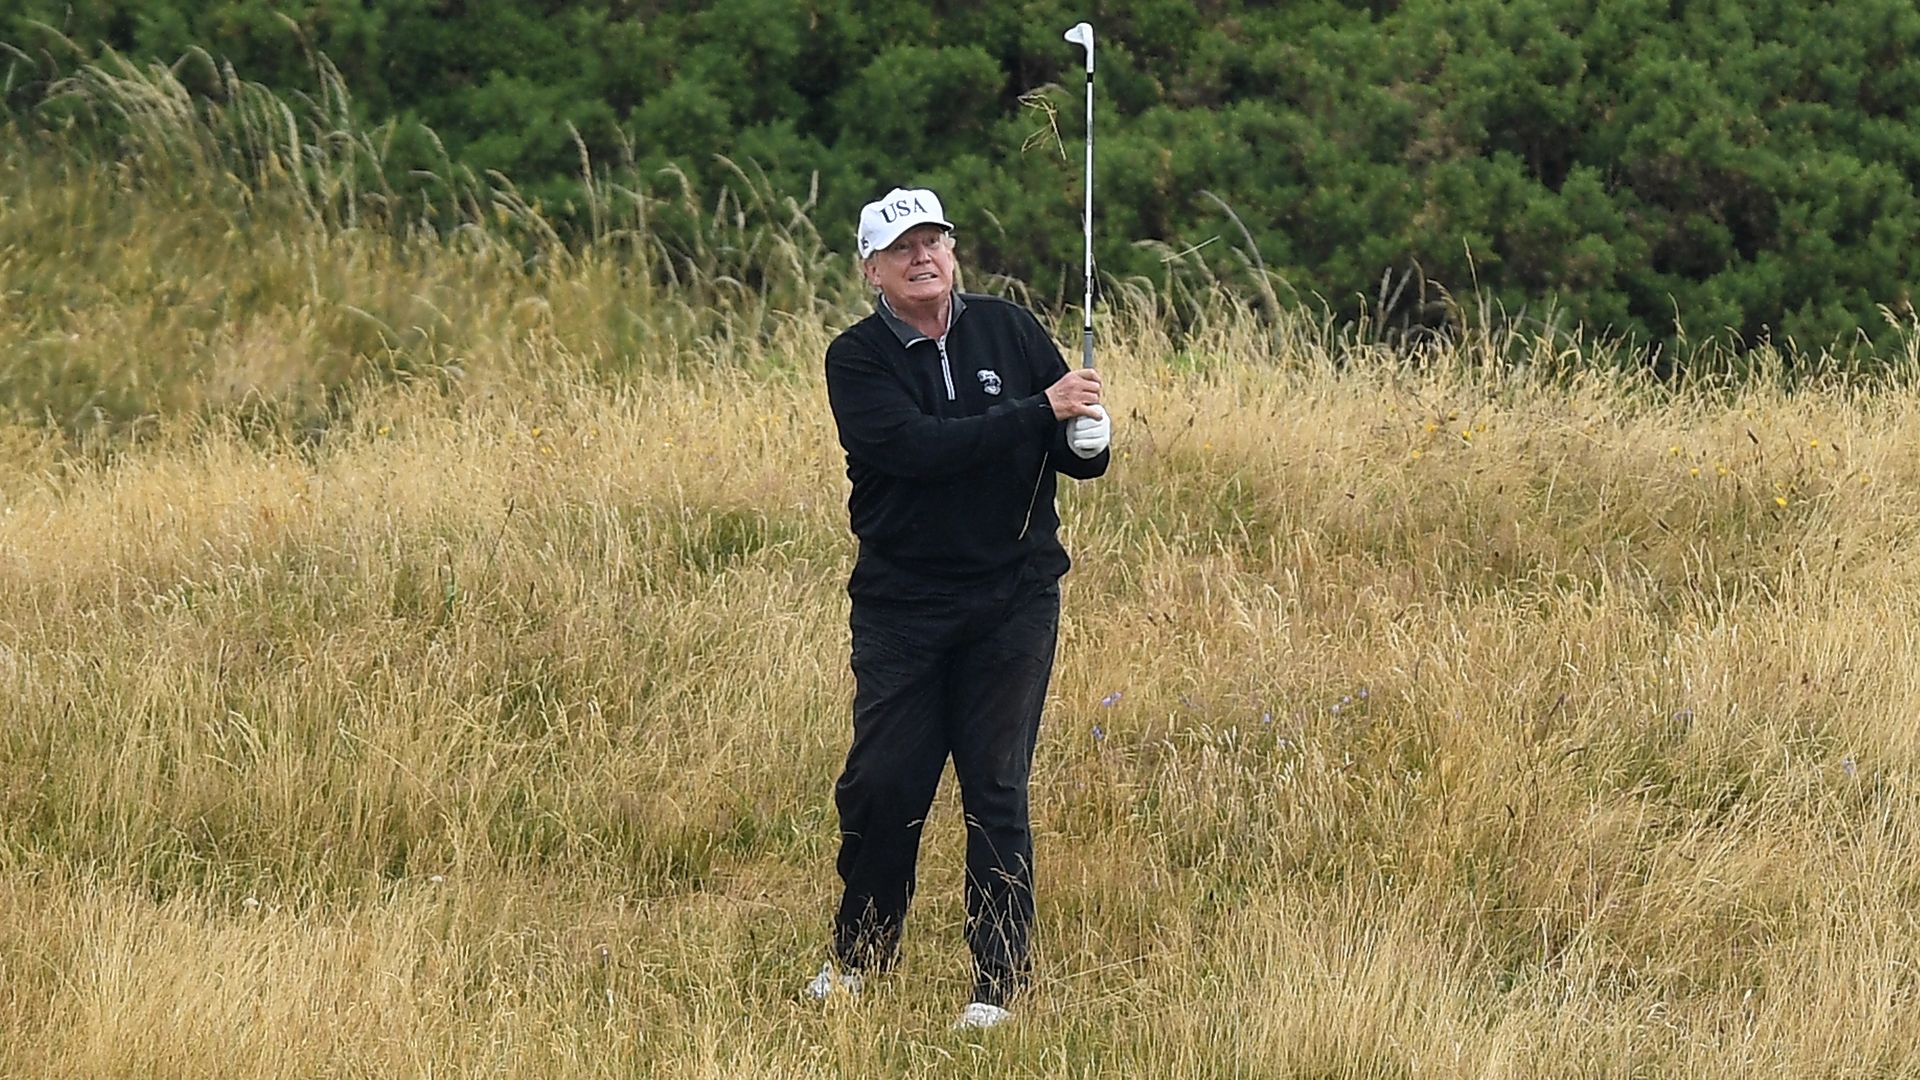 Trump golfing in the brush